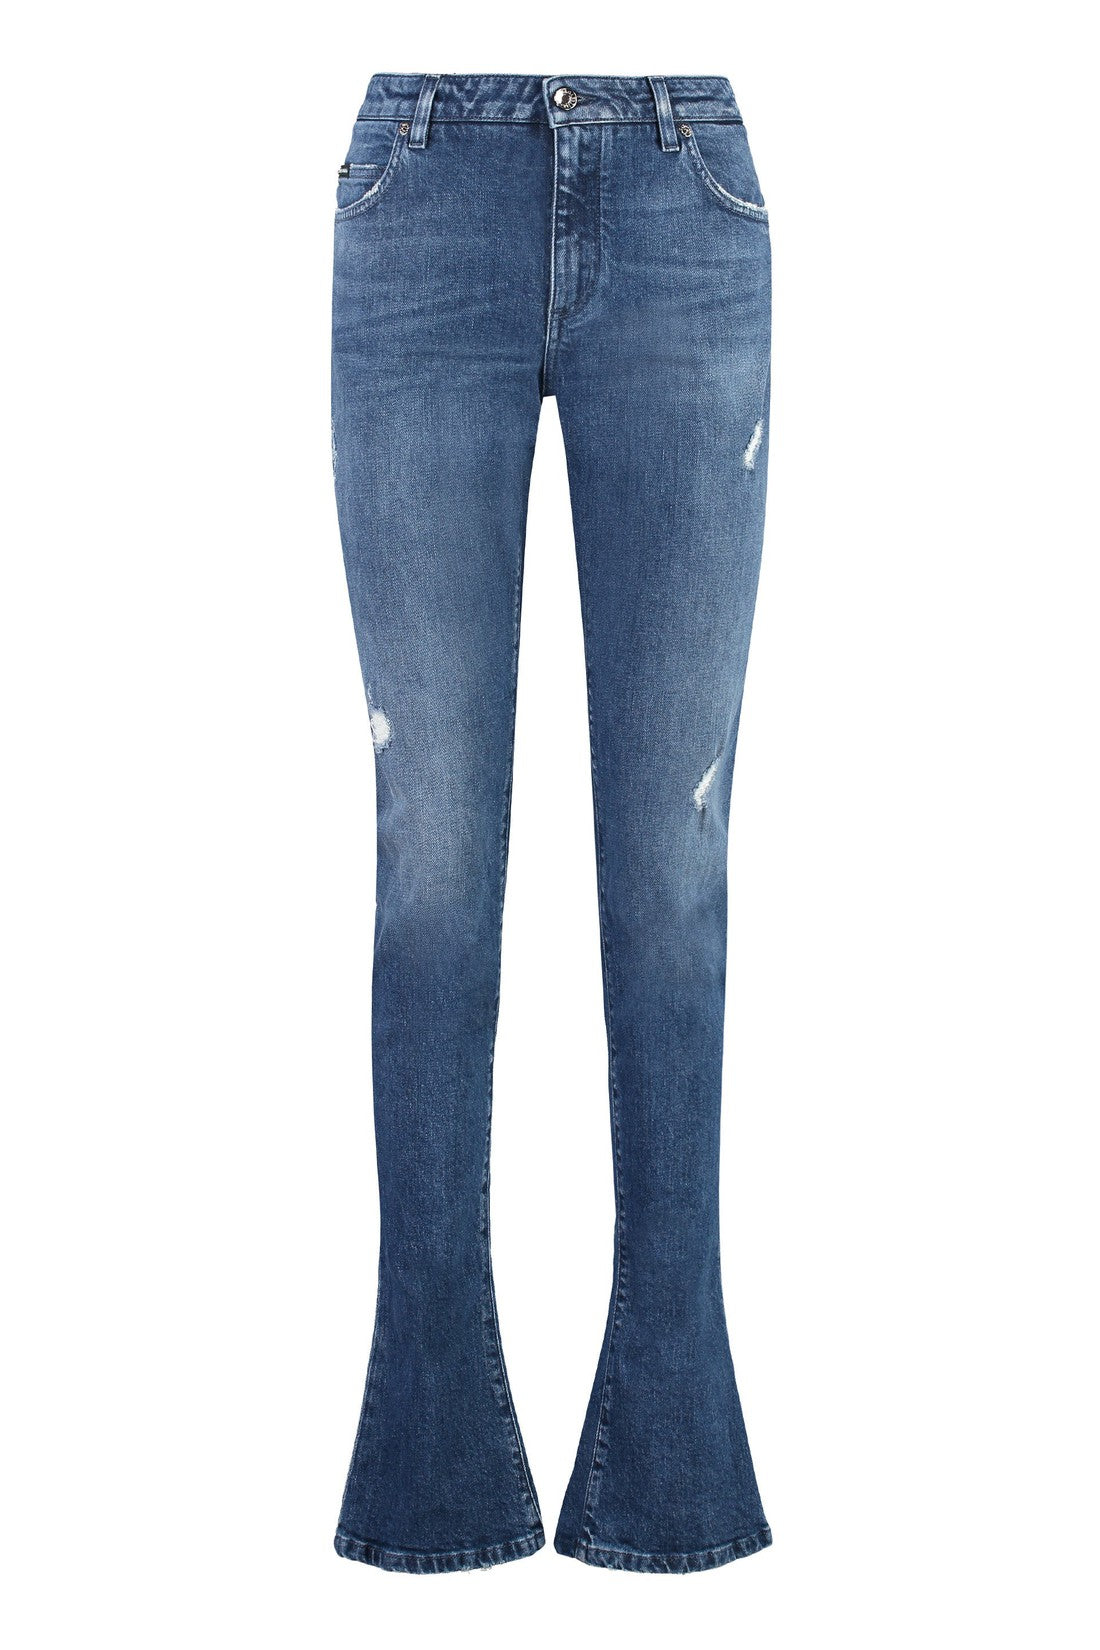 Dolce & Gabbana-OUTLET-SALE-5-pocket skinny jeans-ARCHIVIST